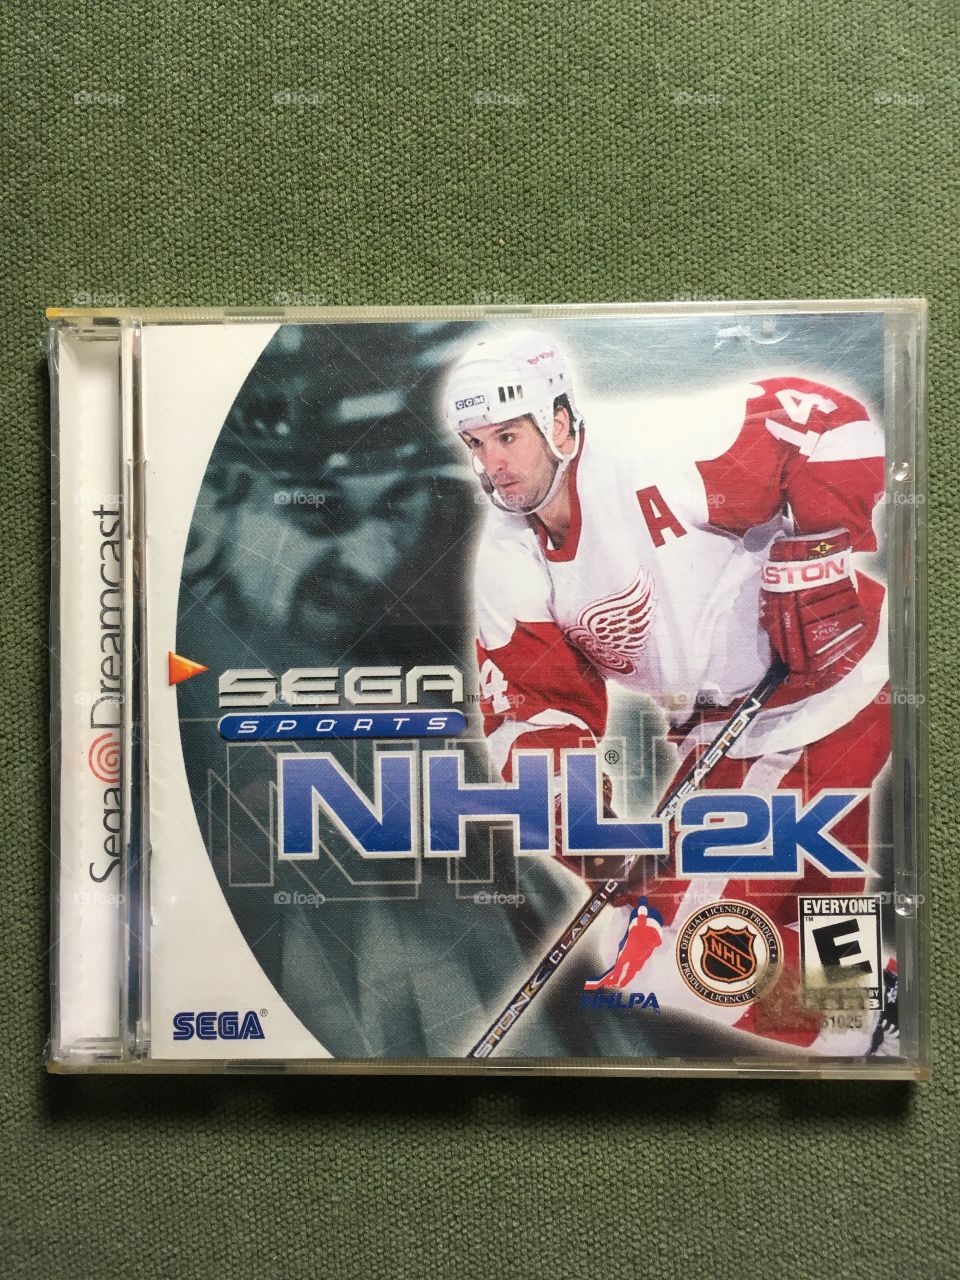 Sega Sports - NHL 2K
Video game for Sega Dreamcast 
Brand New Sealed
Released - 2000